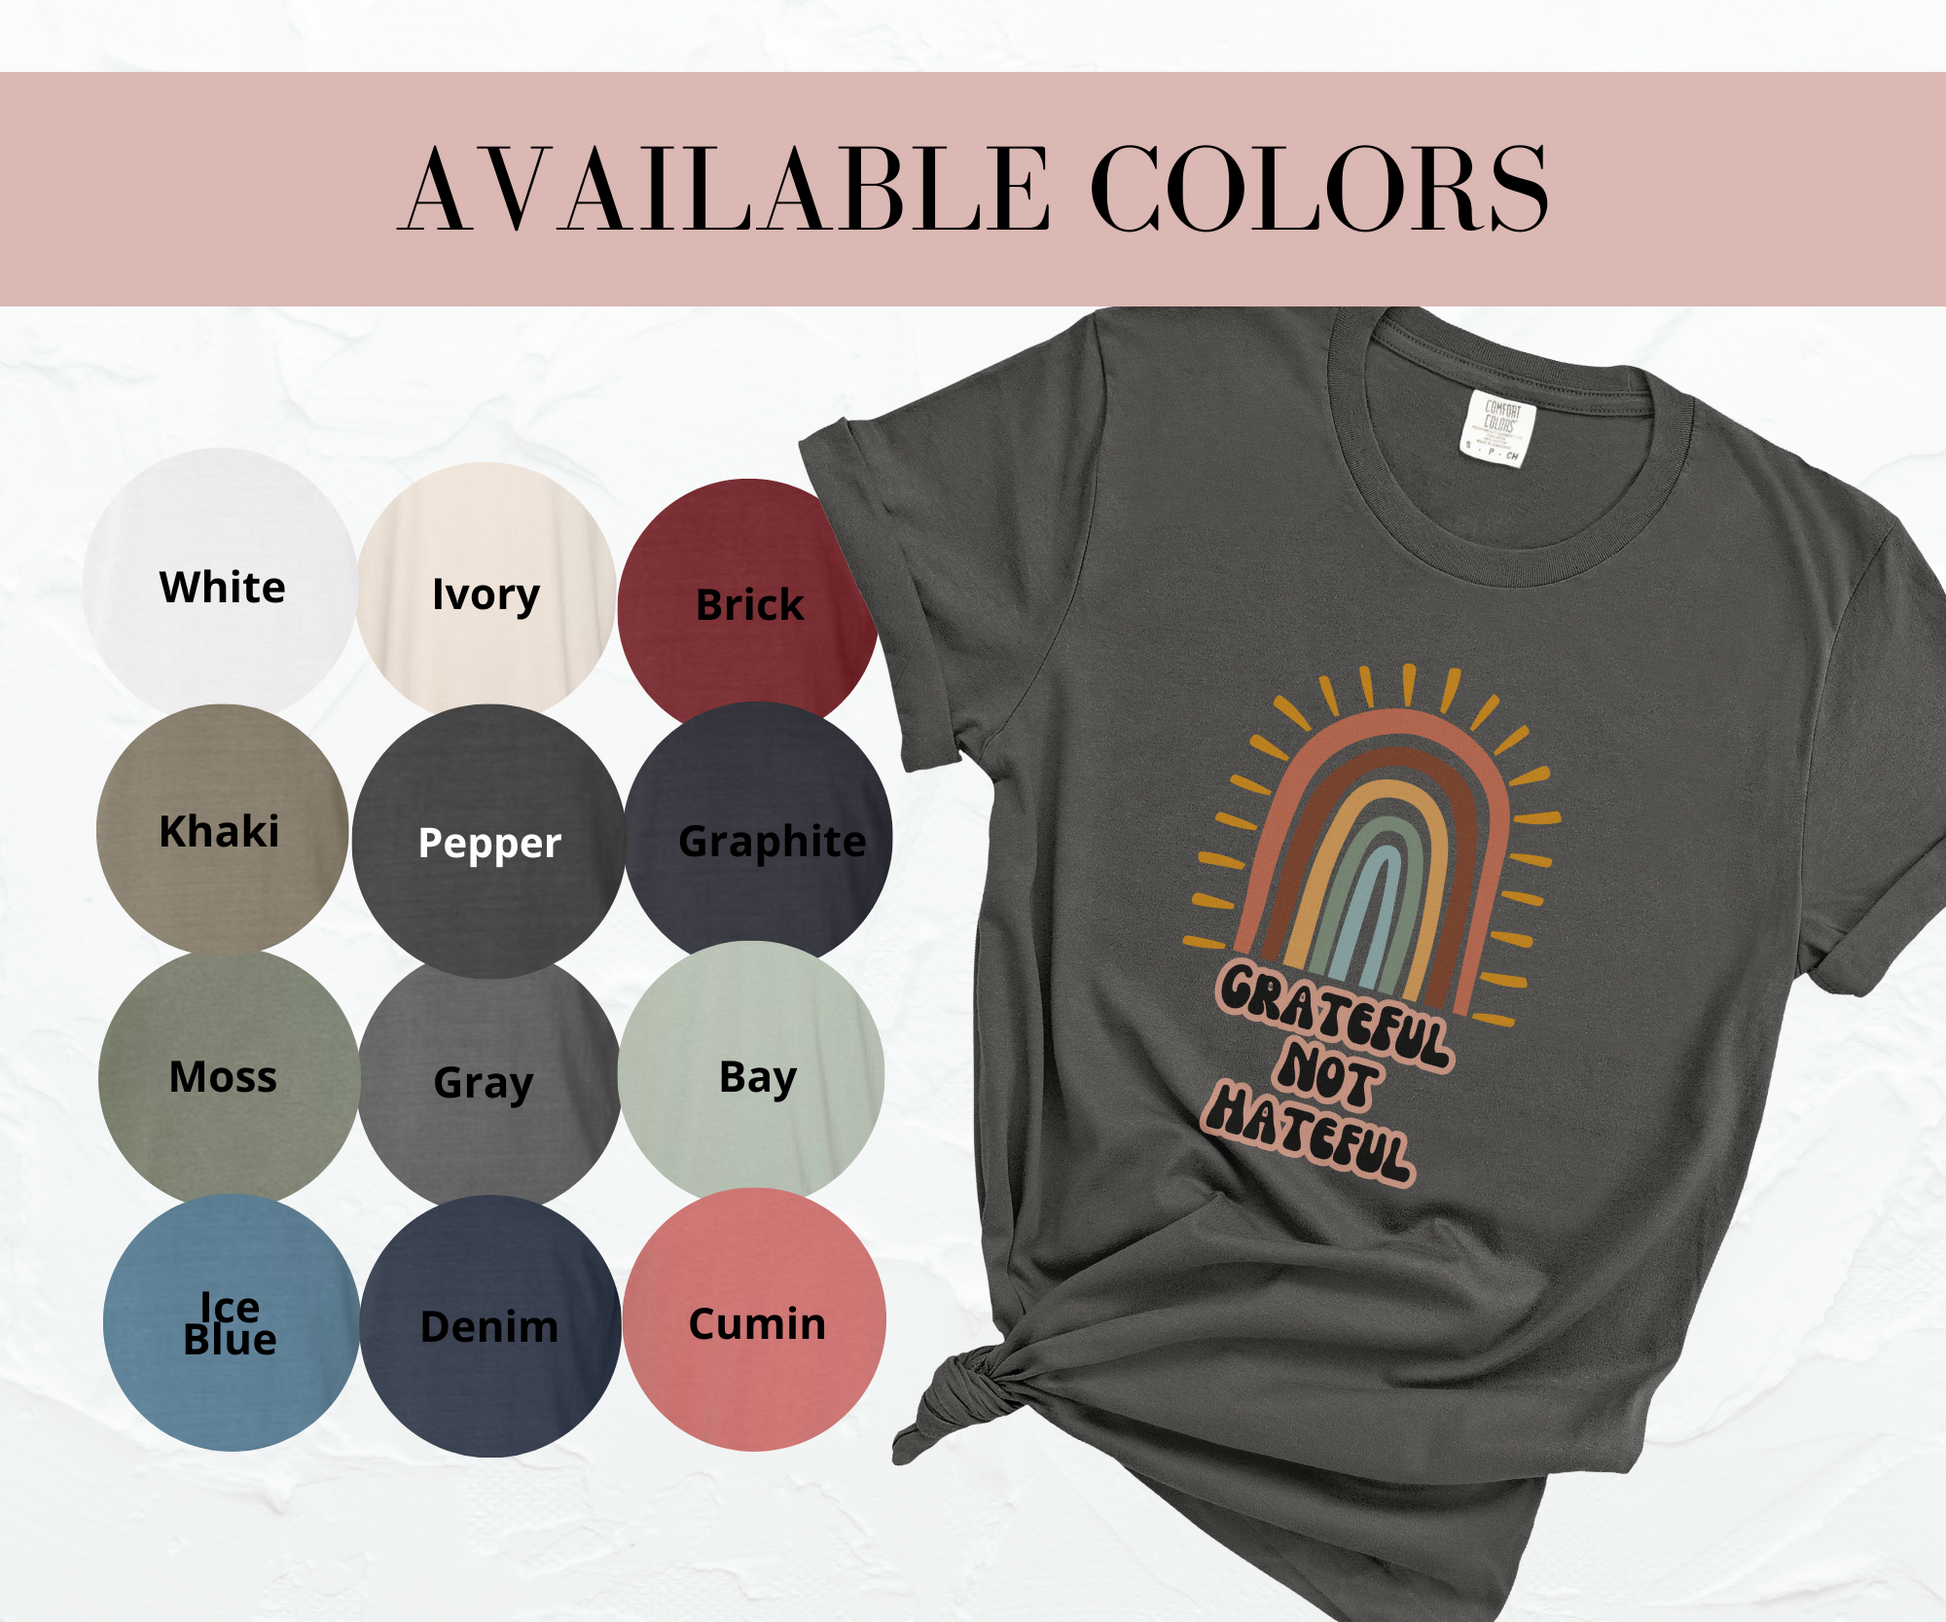 Grateful Not Hateful Rainbow T-Shirt, inclusivity shirt, rainbow shirt, LGBTQ shirt, rainbow apparel